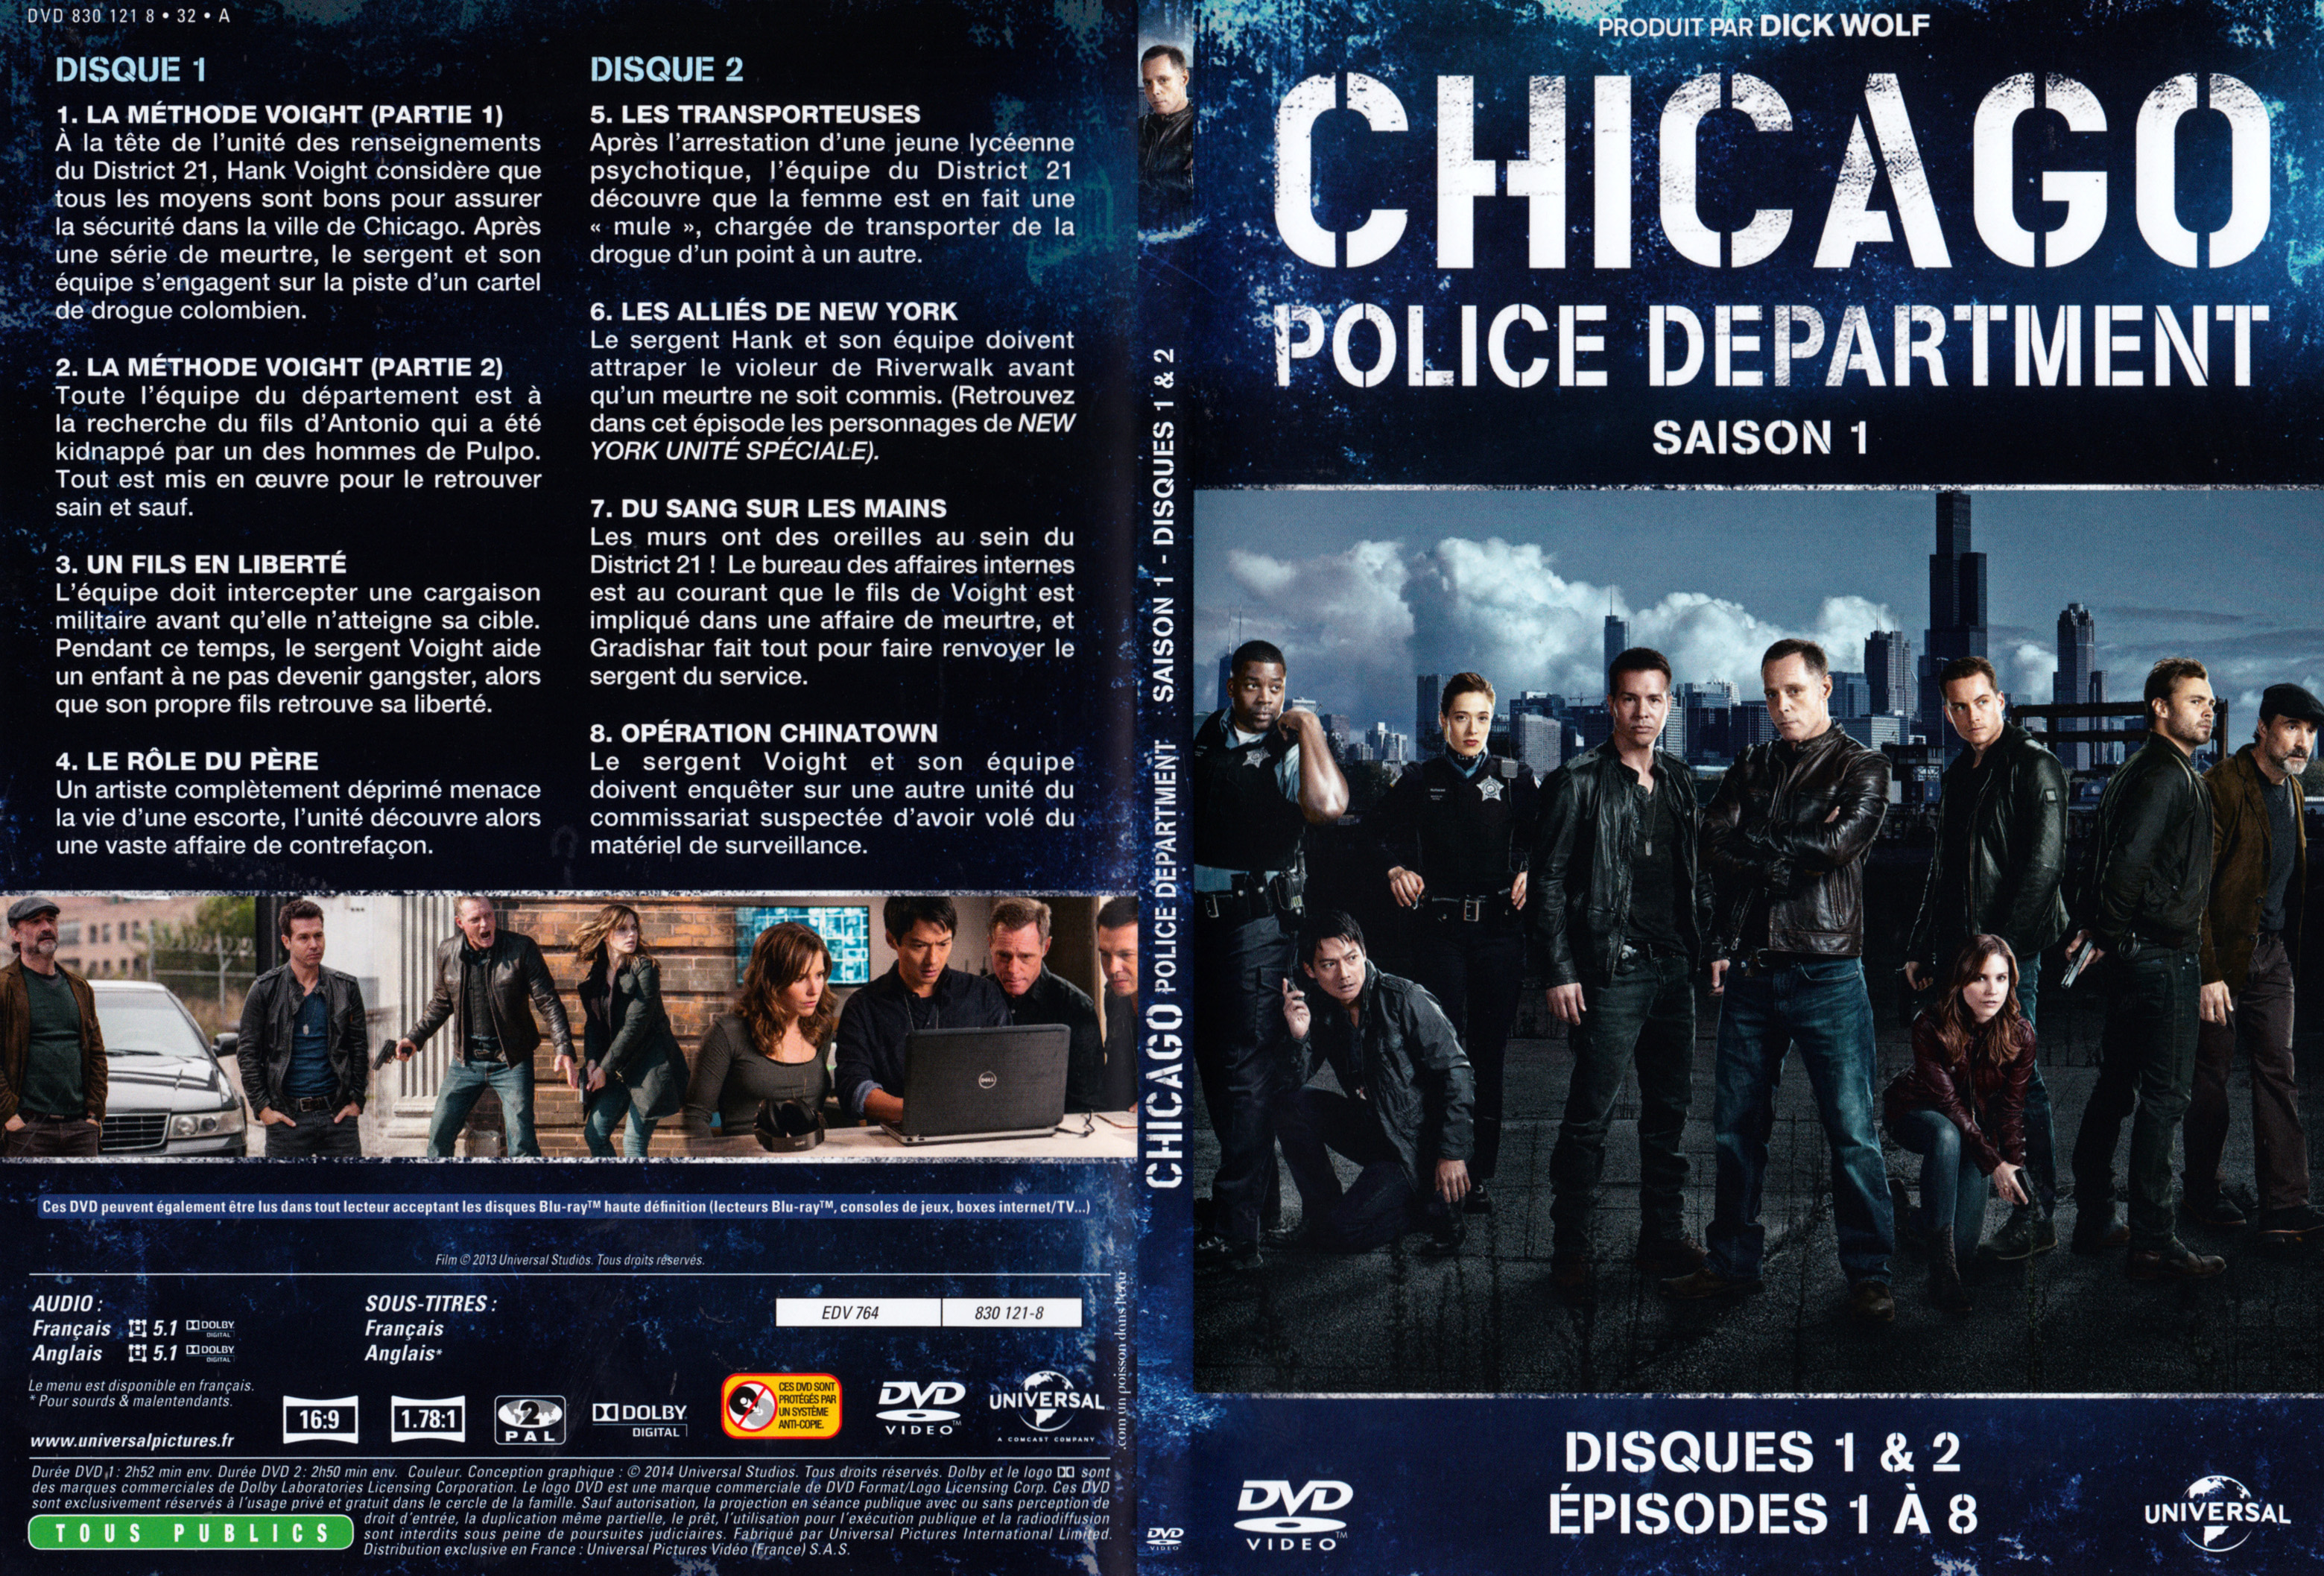 Jaquette DVD Chicago Police Department Saison 1 DISC 1